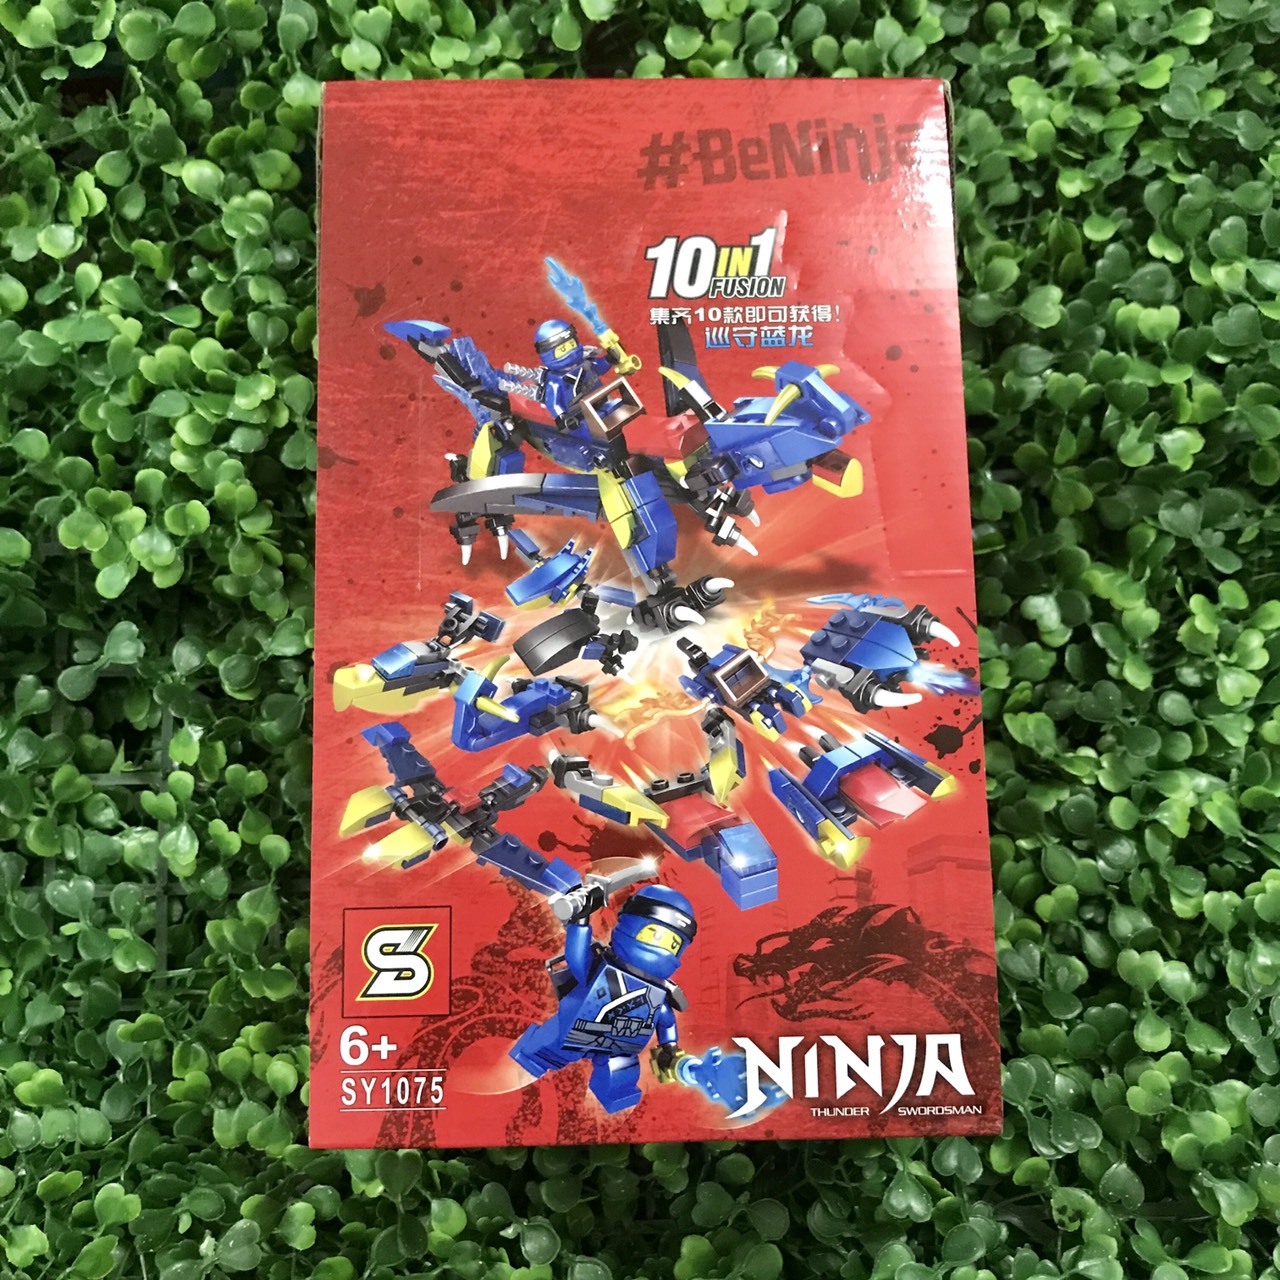 Lego S 10 in 1 Fusion SY1075 - Ninja kiếm thuật sấm sét